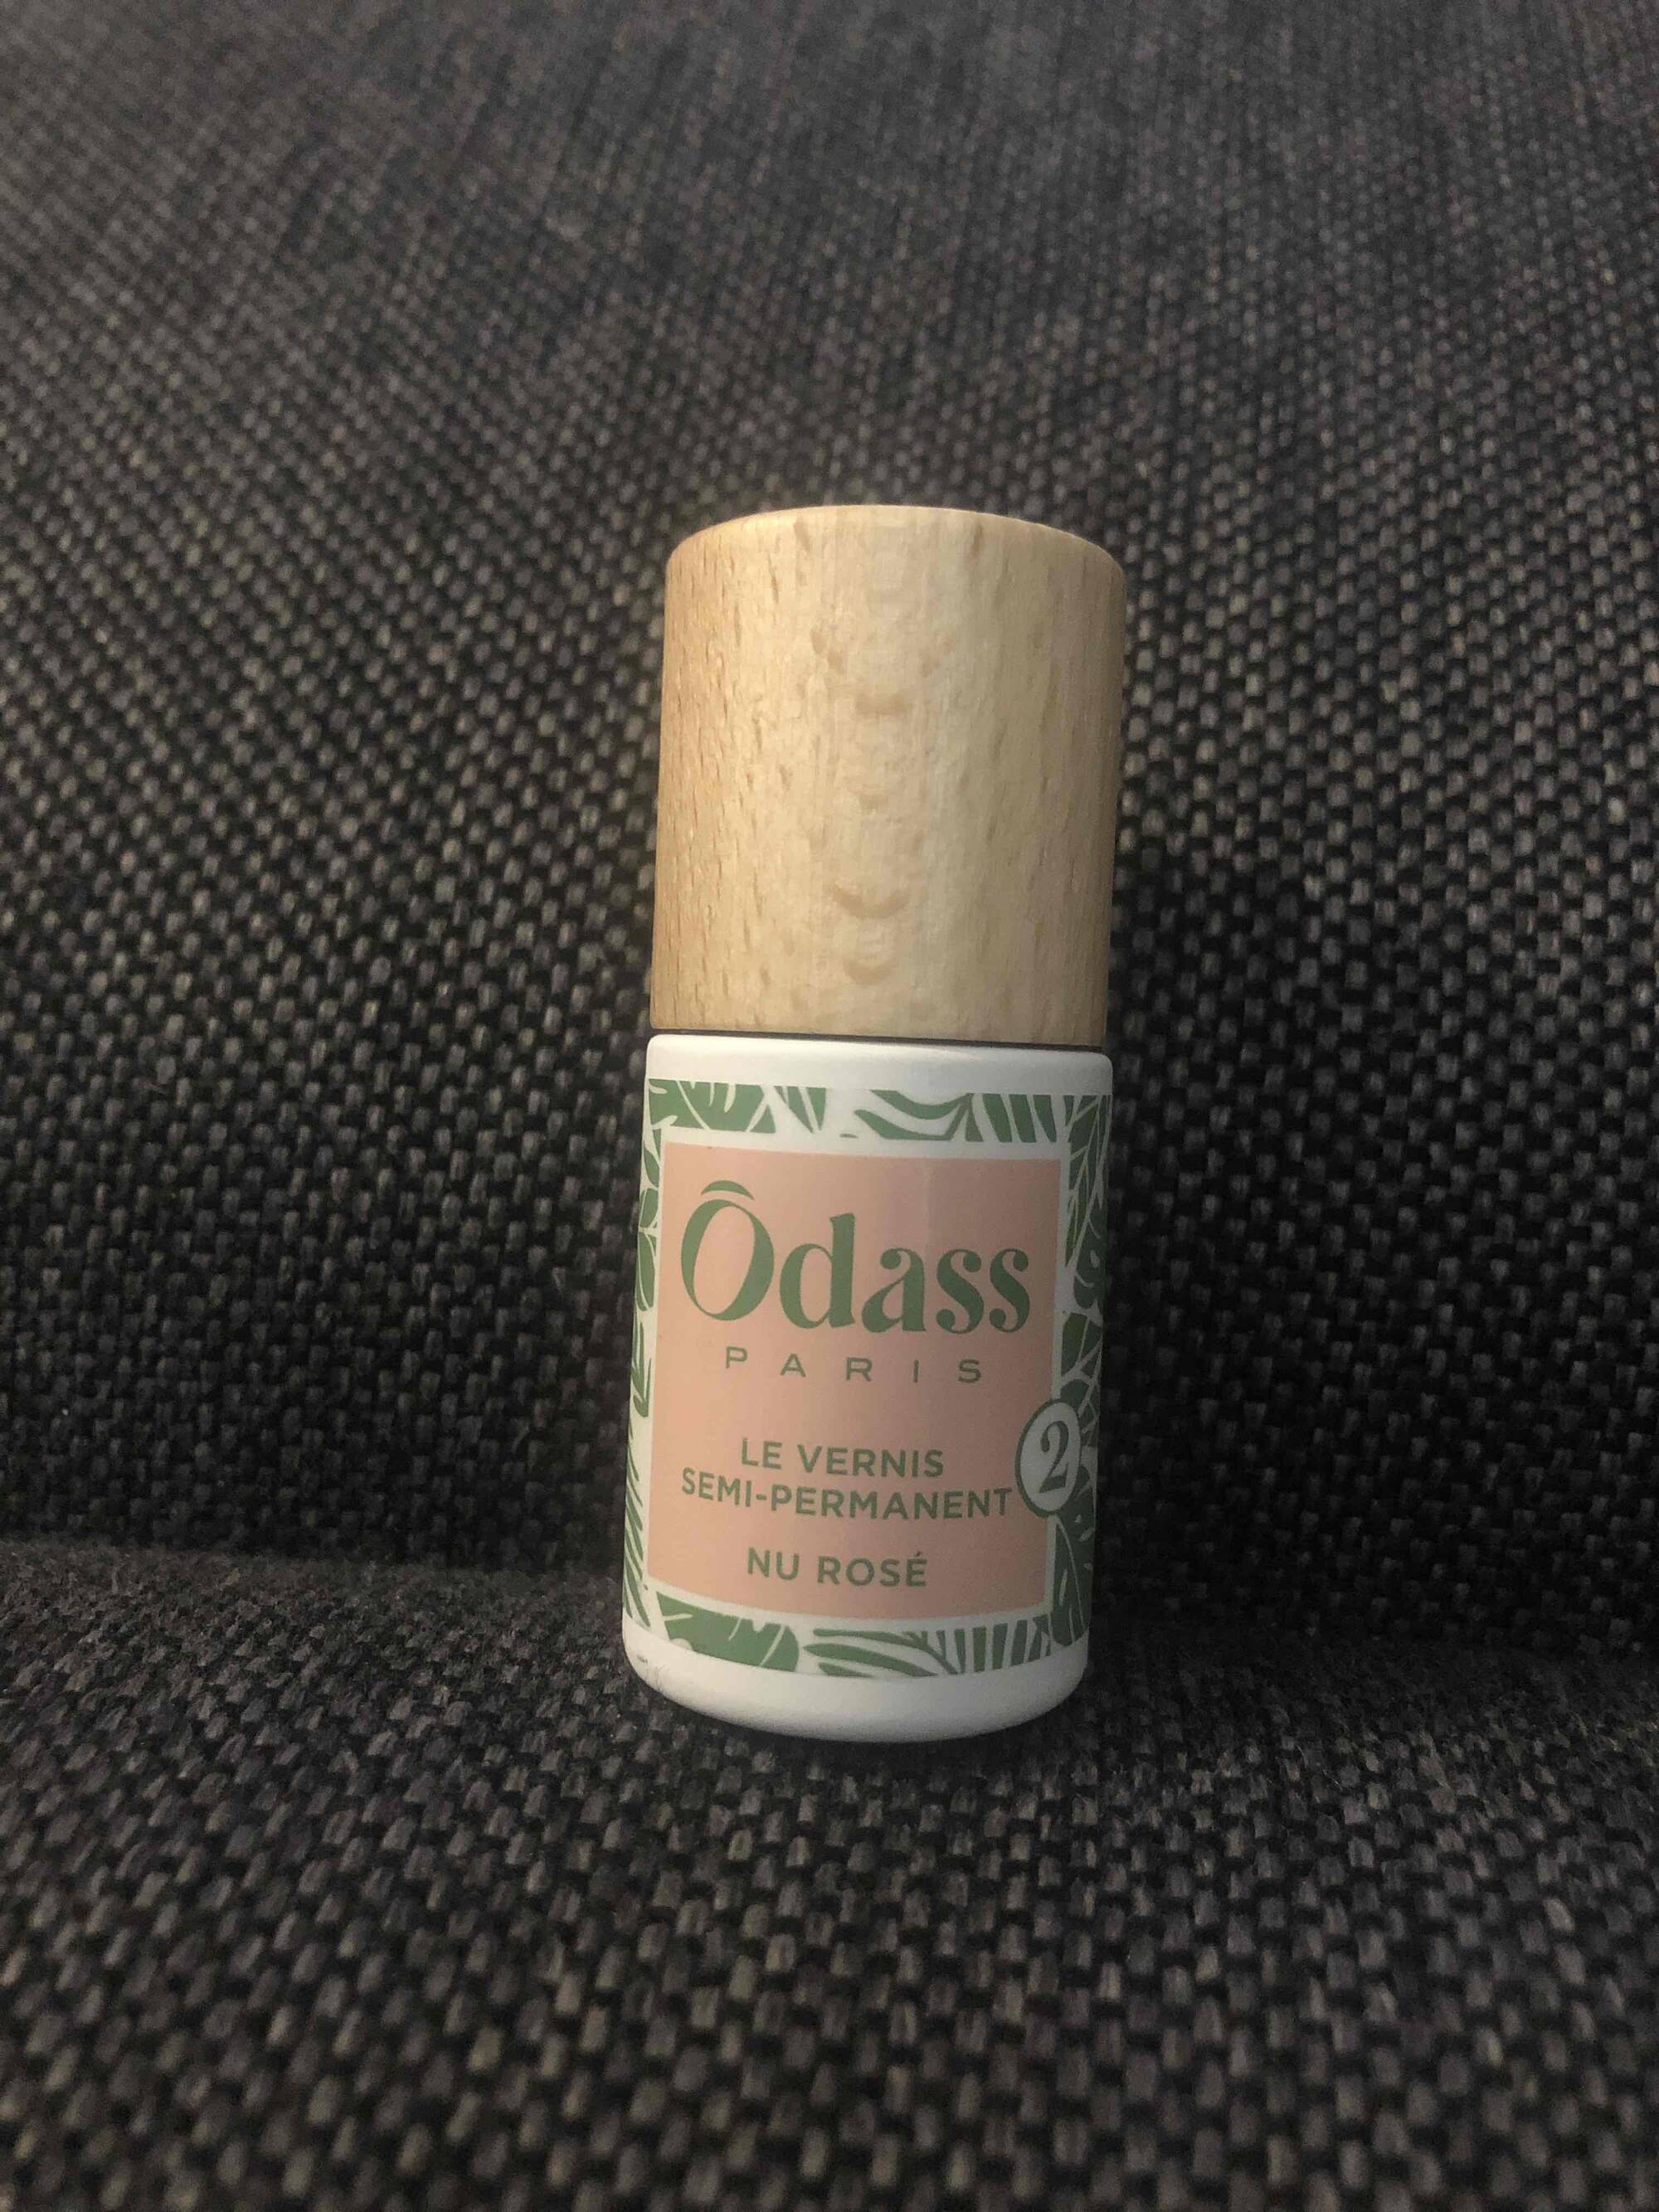 ÔDASS - Le vernis semi-permanent nu rosé 2